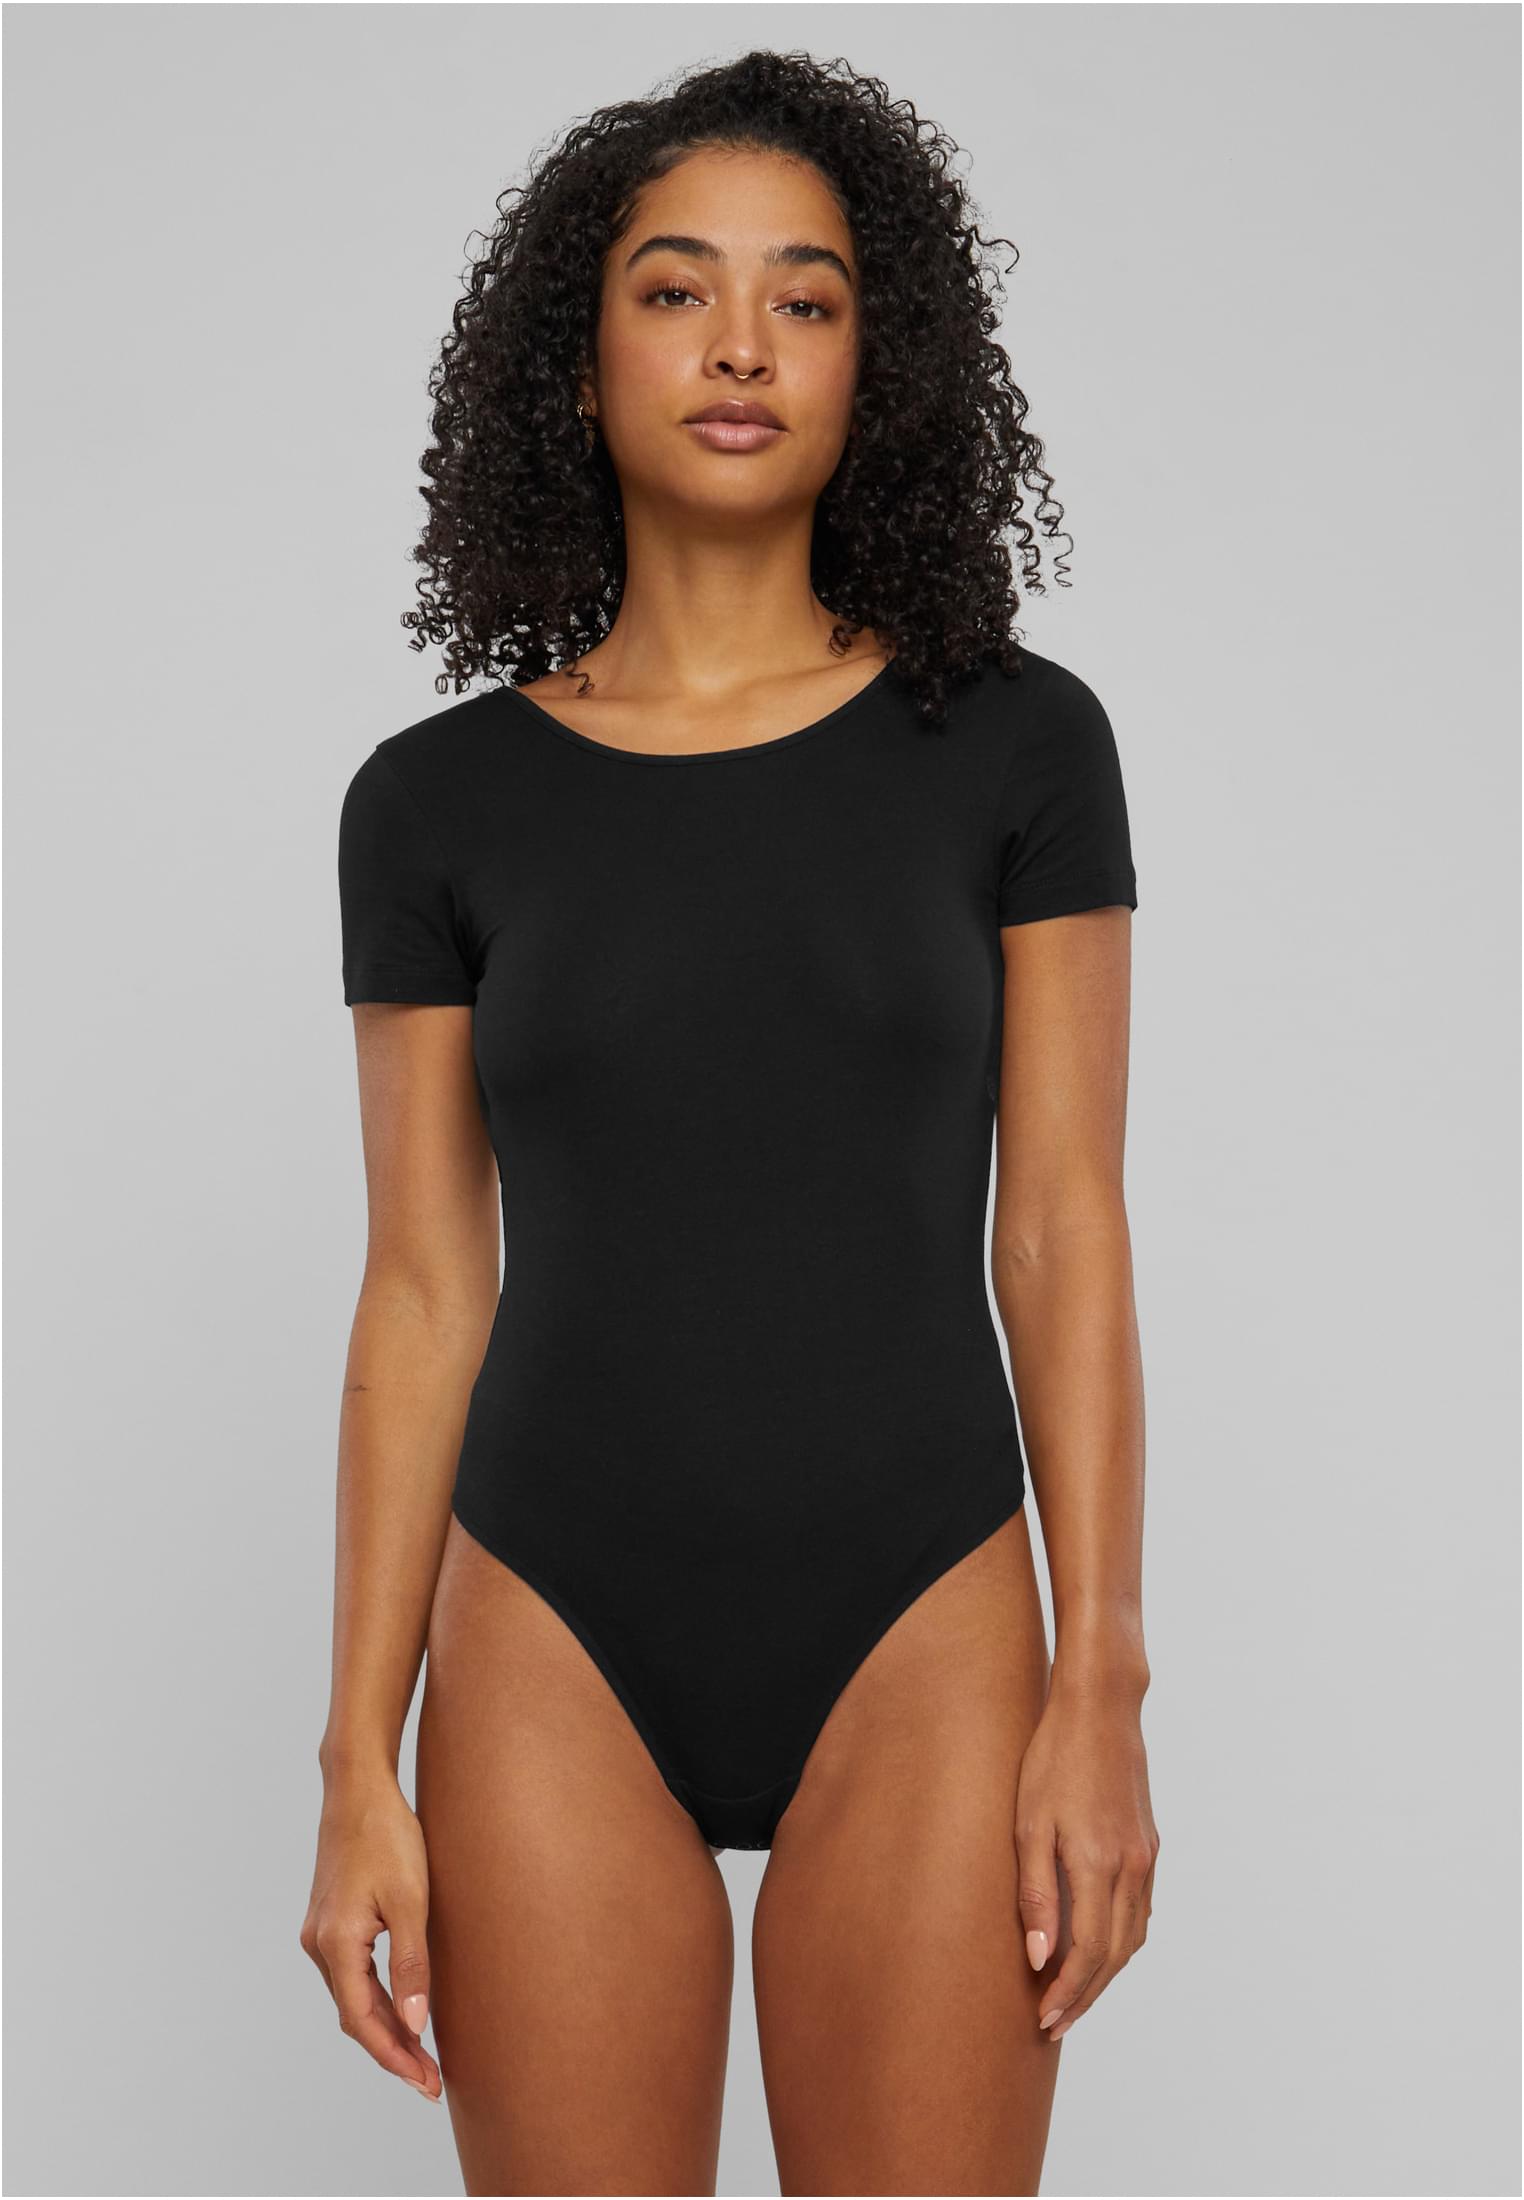 Women's Organic Stretch Jersey Body - Black